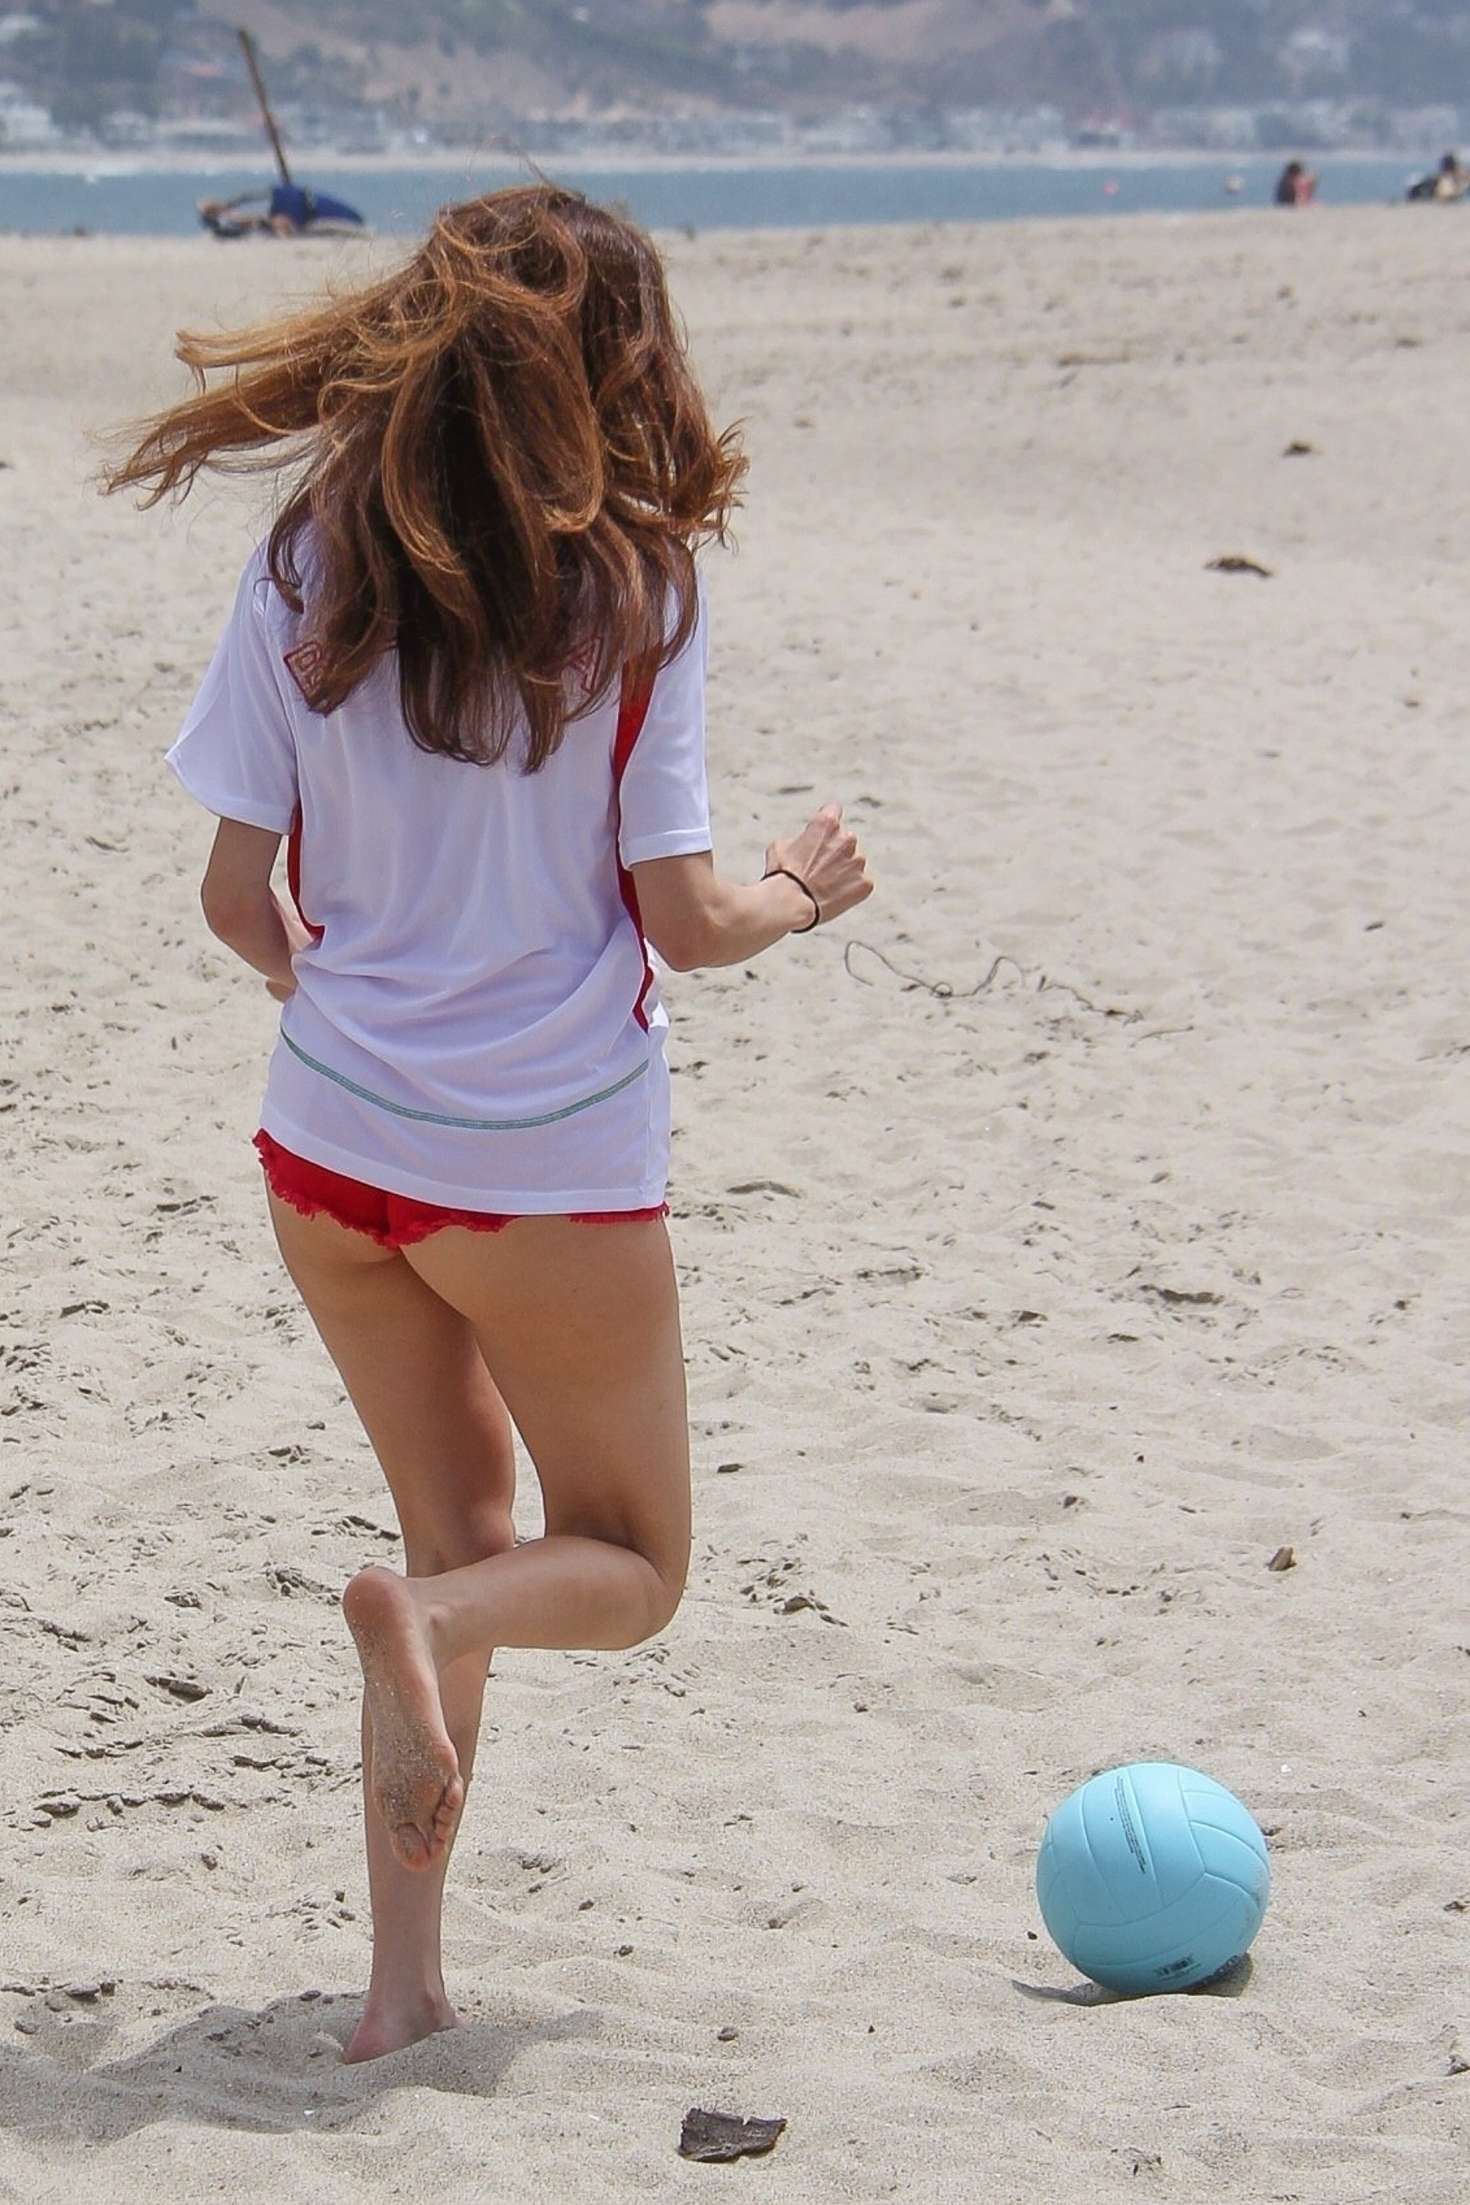 Blanca Blanco in Red Shorts on the beach in Malibu